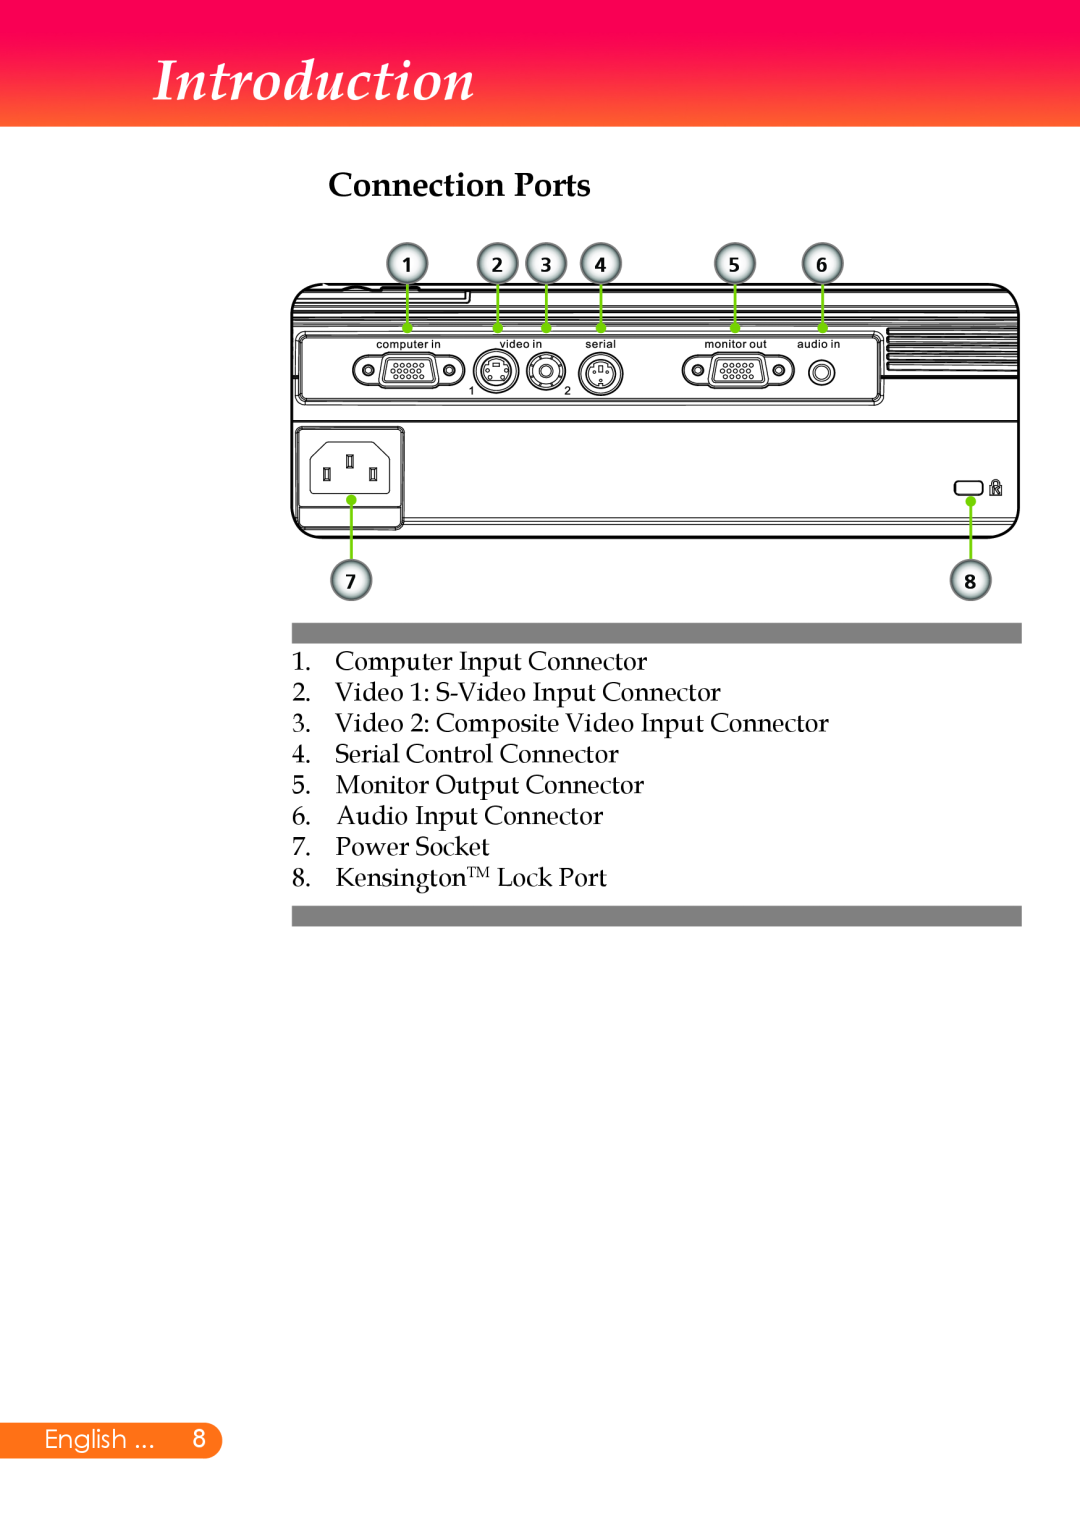 InFocus X7, X6 Connection Ports, Audio Input Connector 7. Power Socket 8. KensingtonTM Lock Port, Introduction, English 